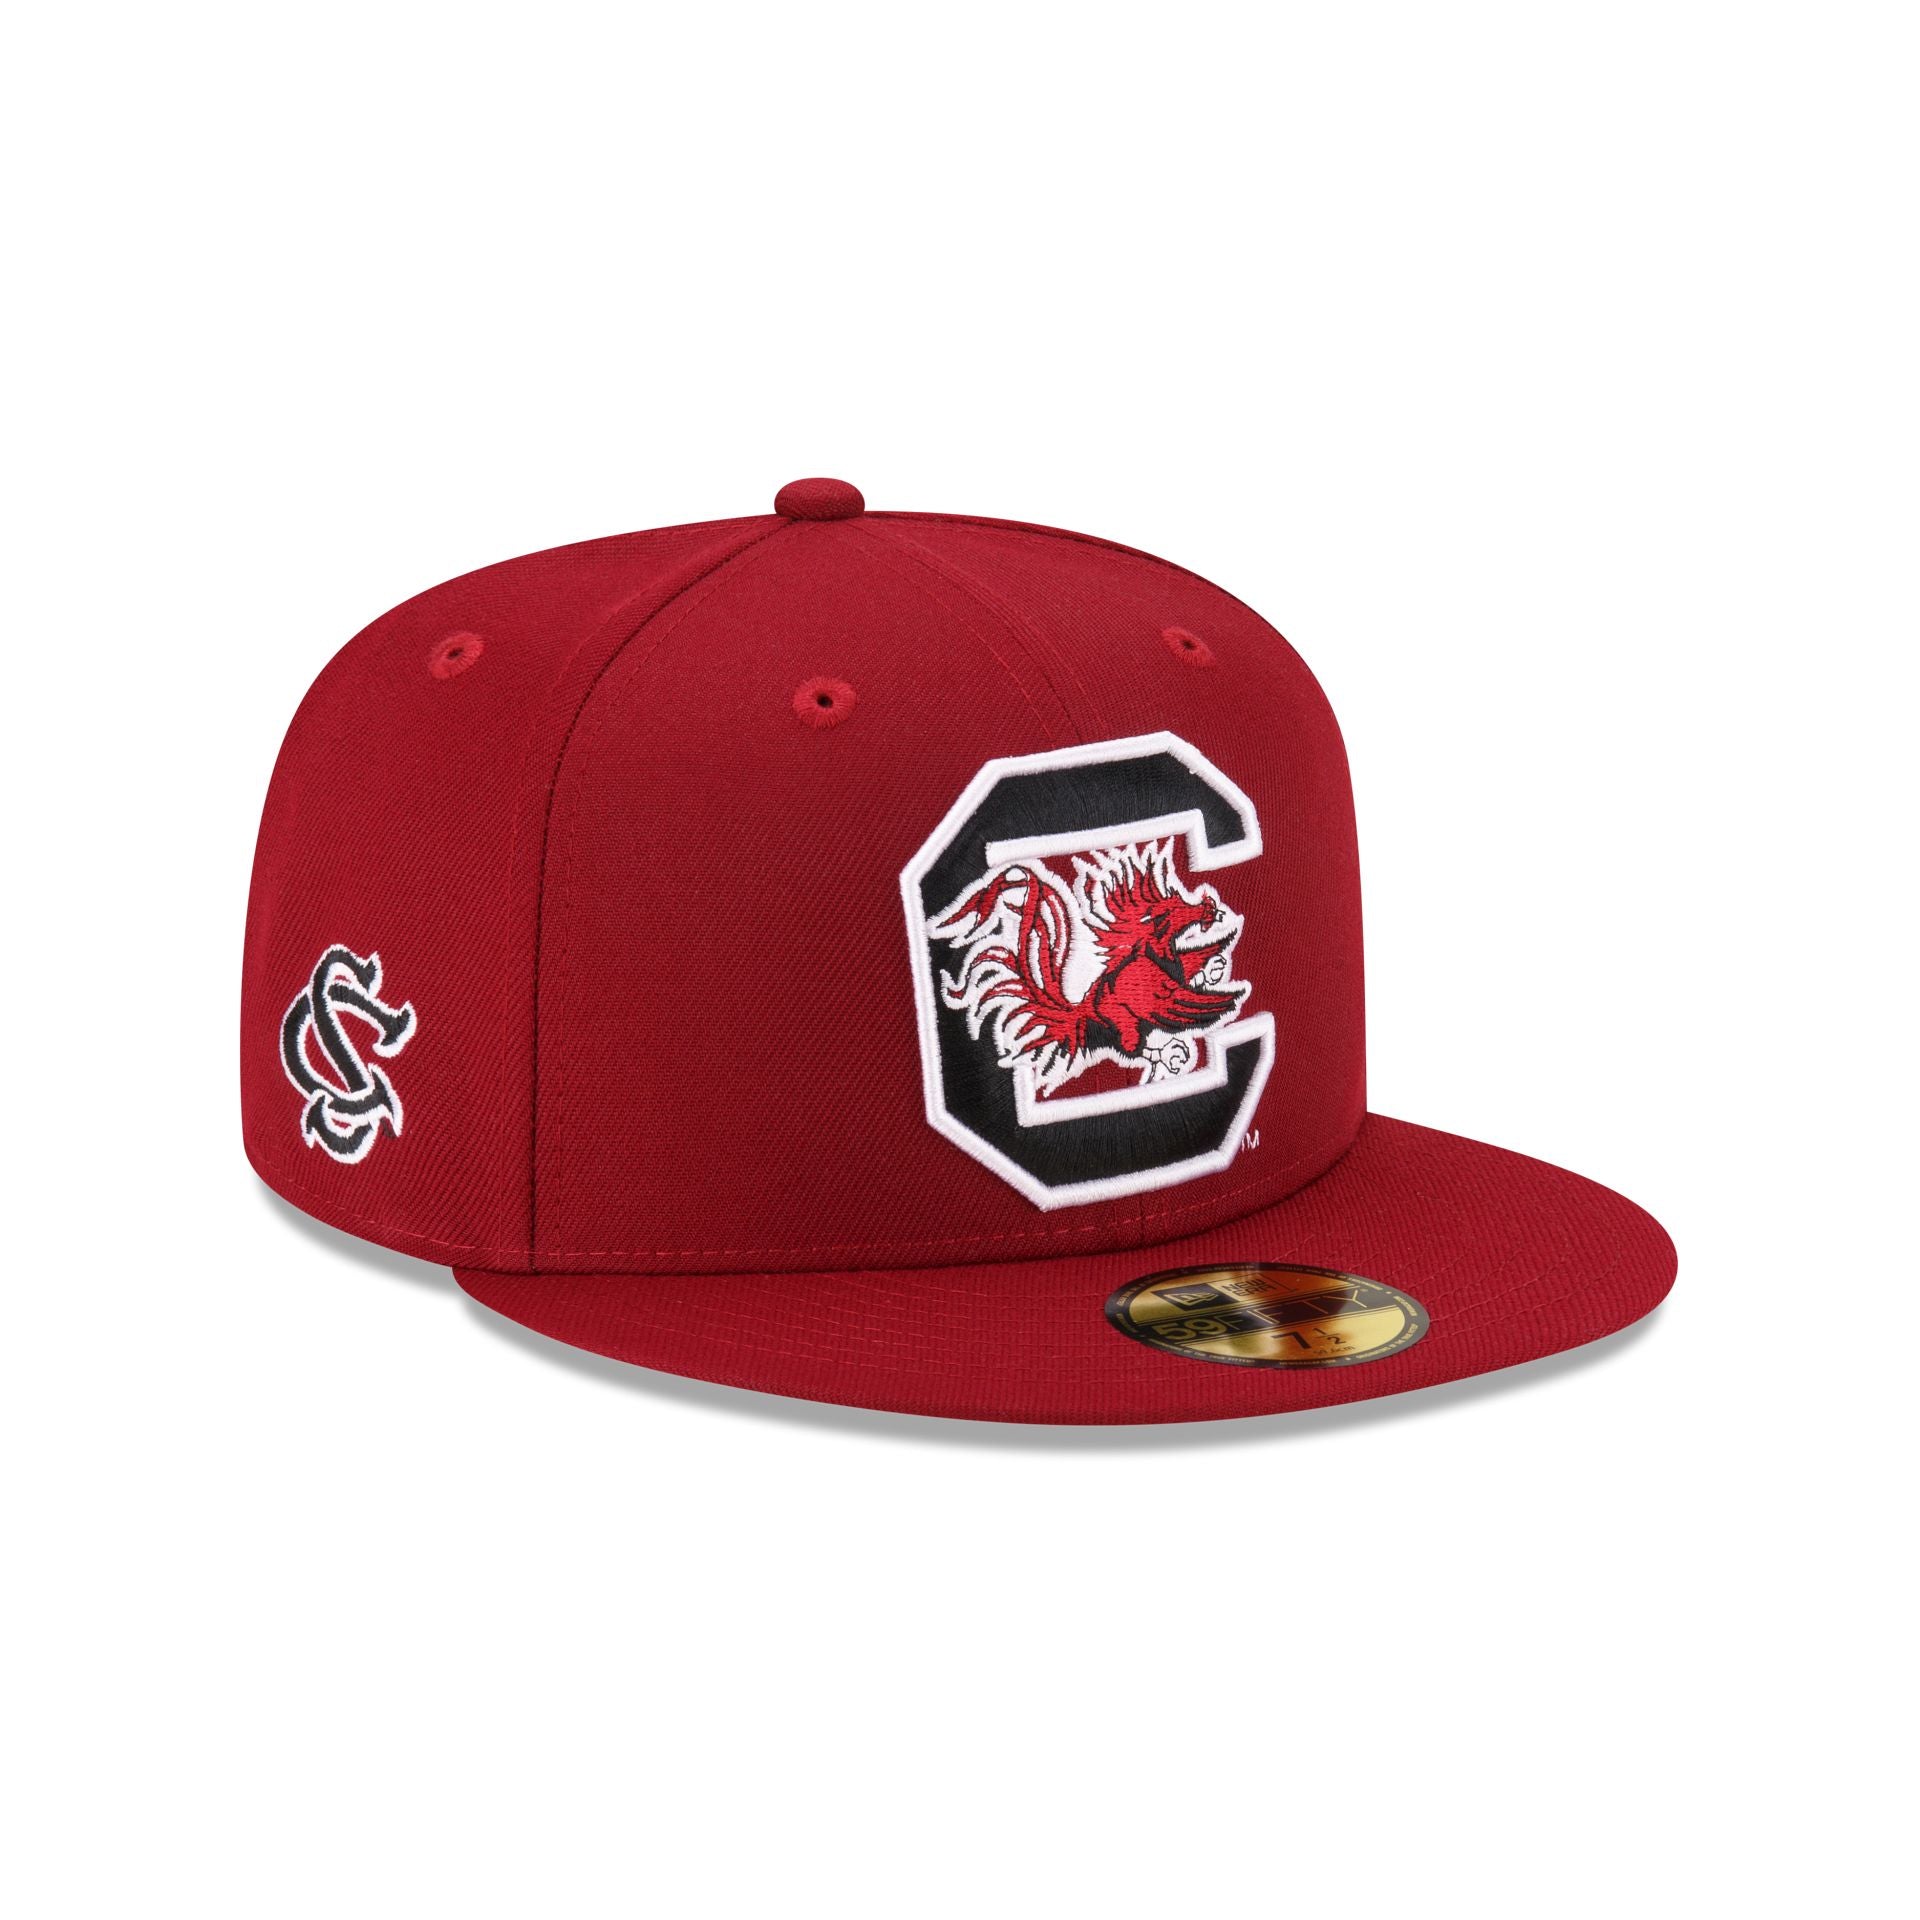 Louisville Bats - Throwback Redbirds fitted caps by New Era Cap